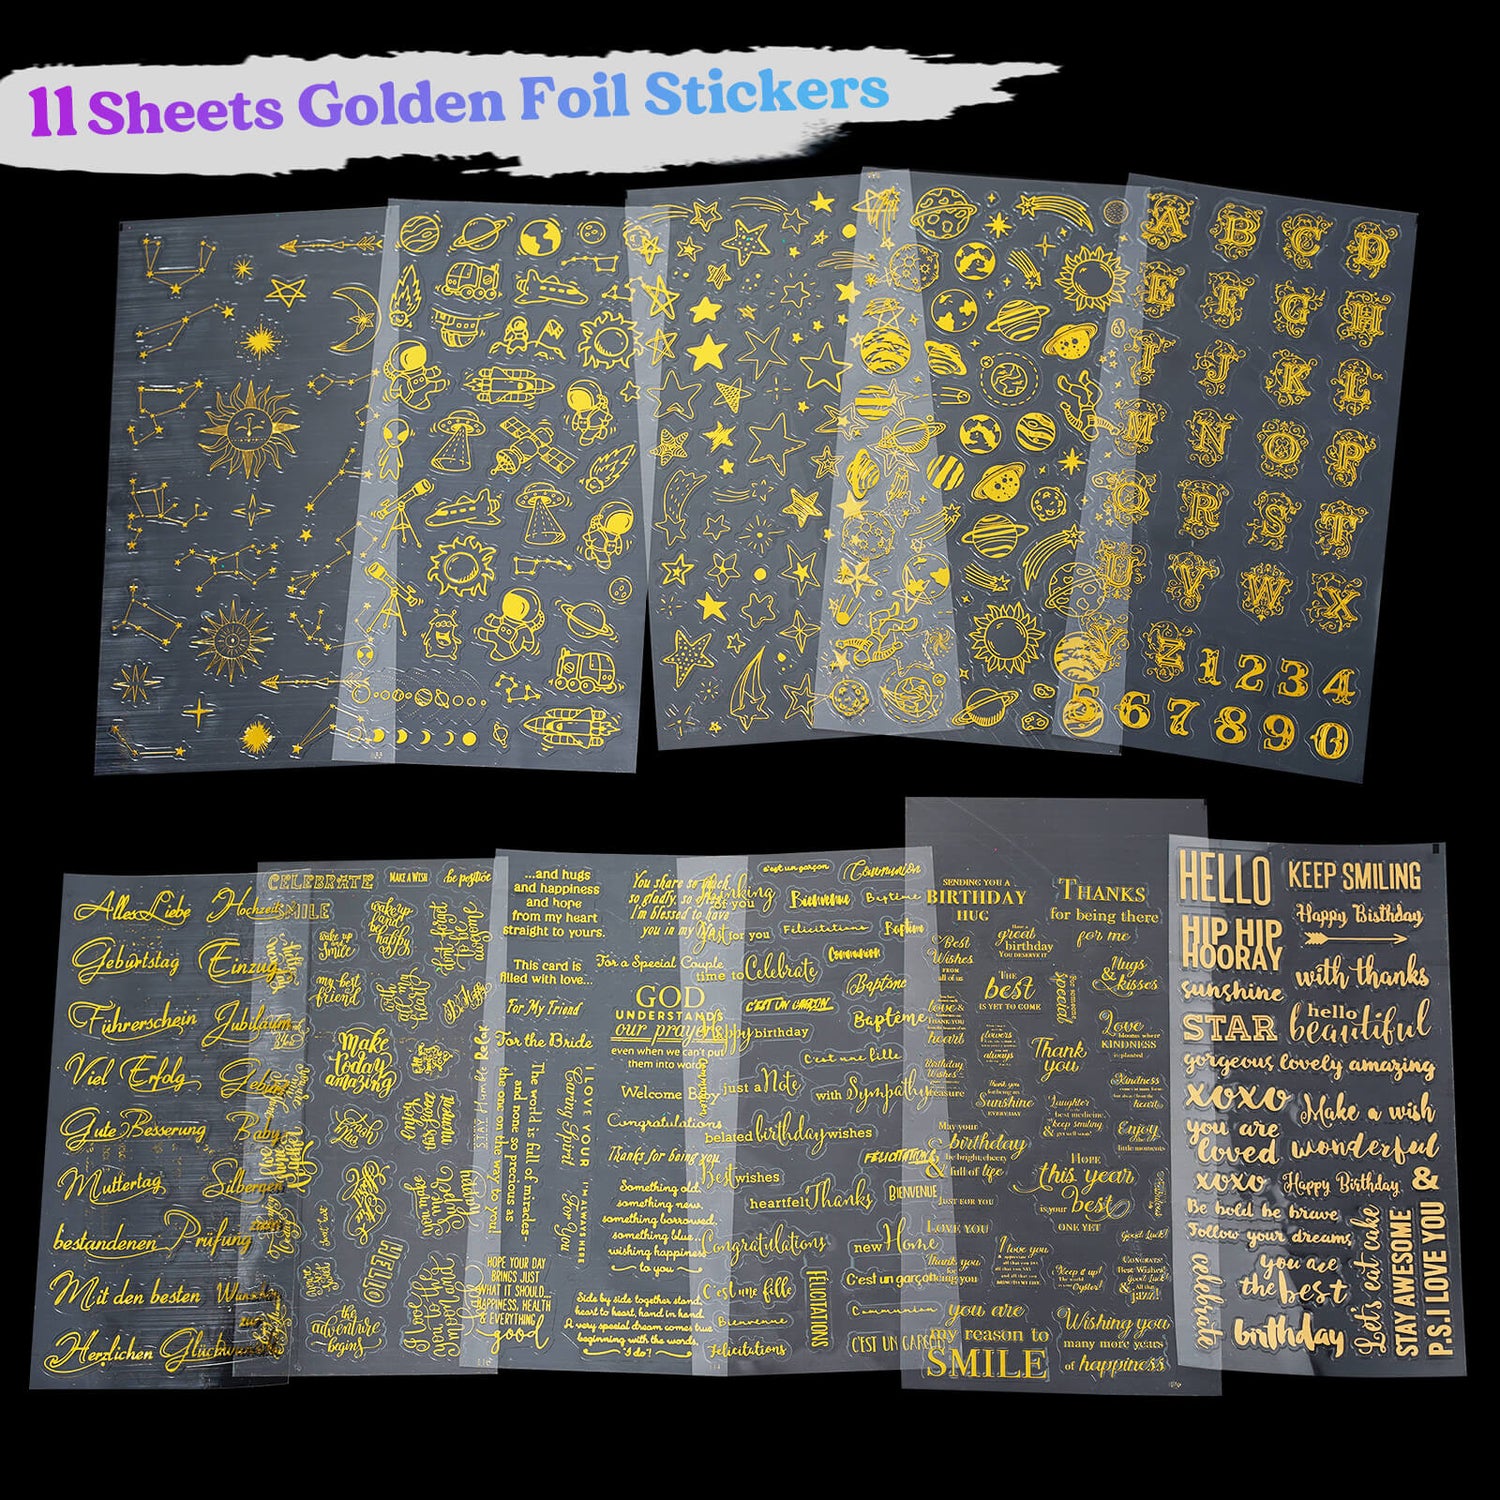 Gold Foil Alphabet Letter Sticker Sheet, Silver Letter Stickers 